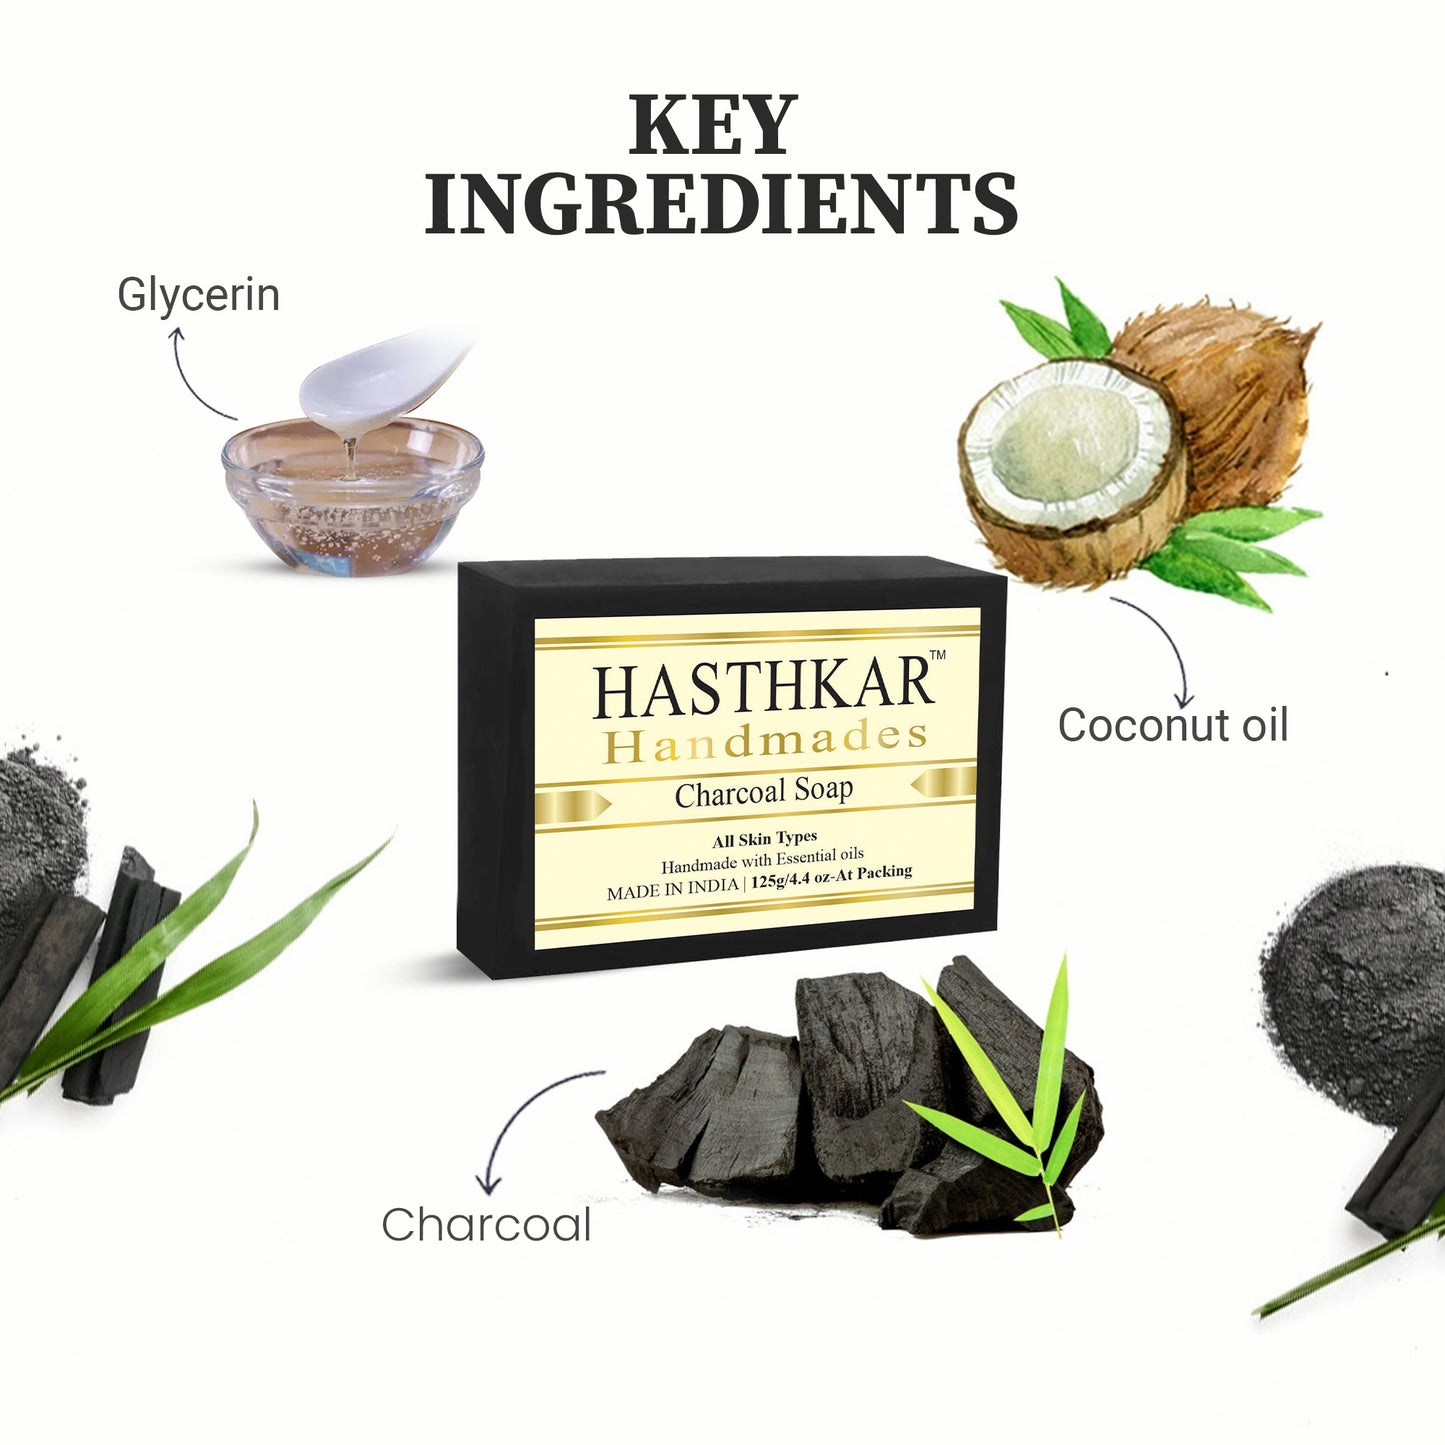 Hasthkar Handmades Glycerine Natural Charcoal Soap 125Gm